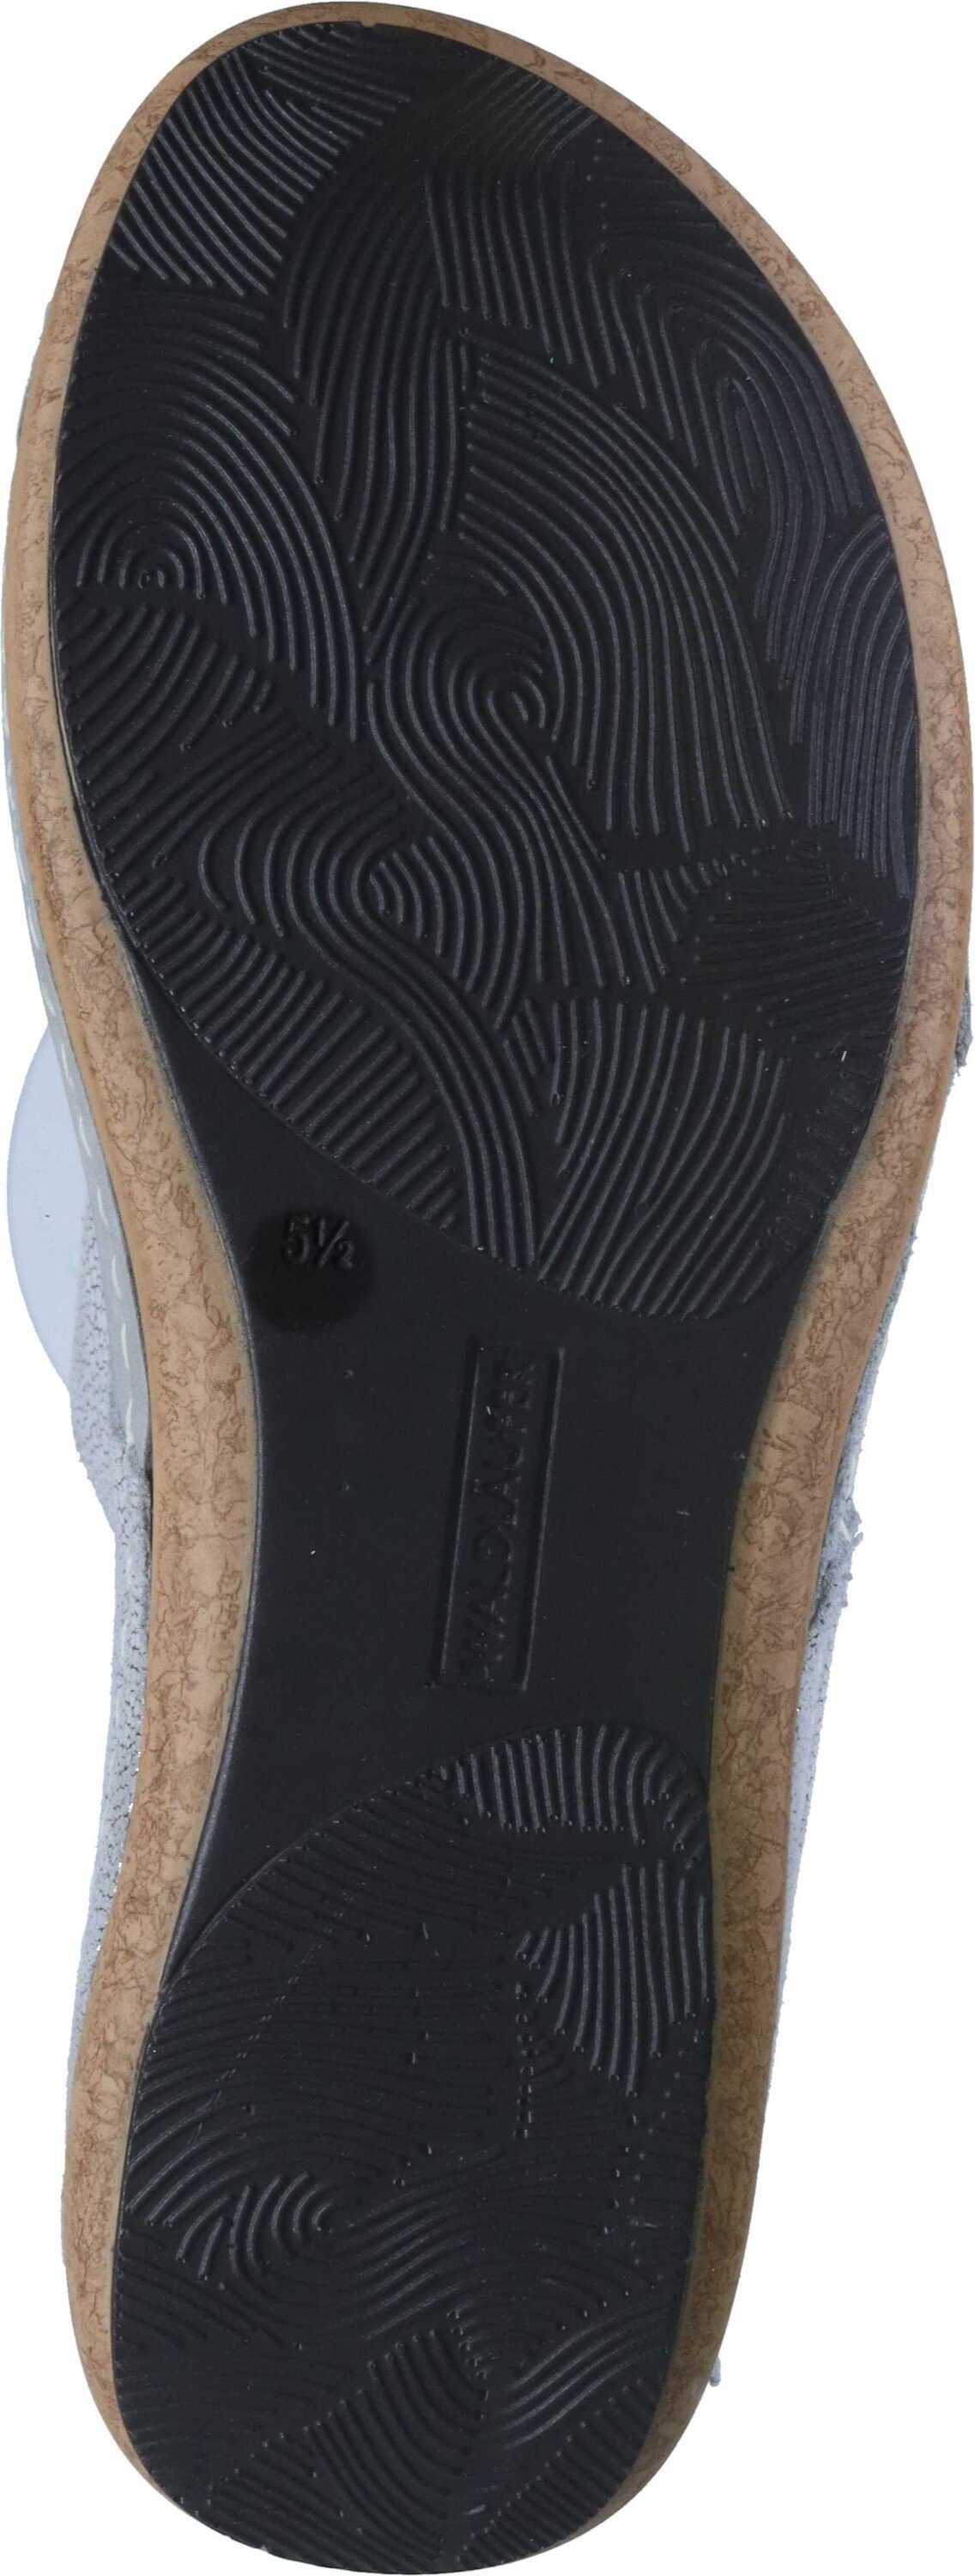 Sandalette echtem aus Leder Sandalen Waldläufer